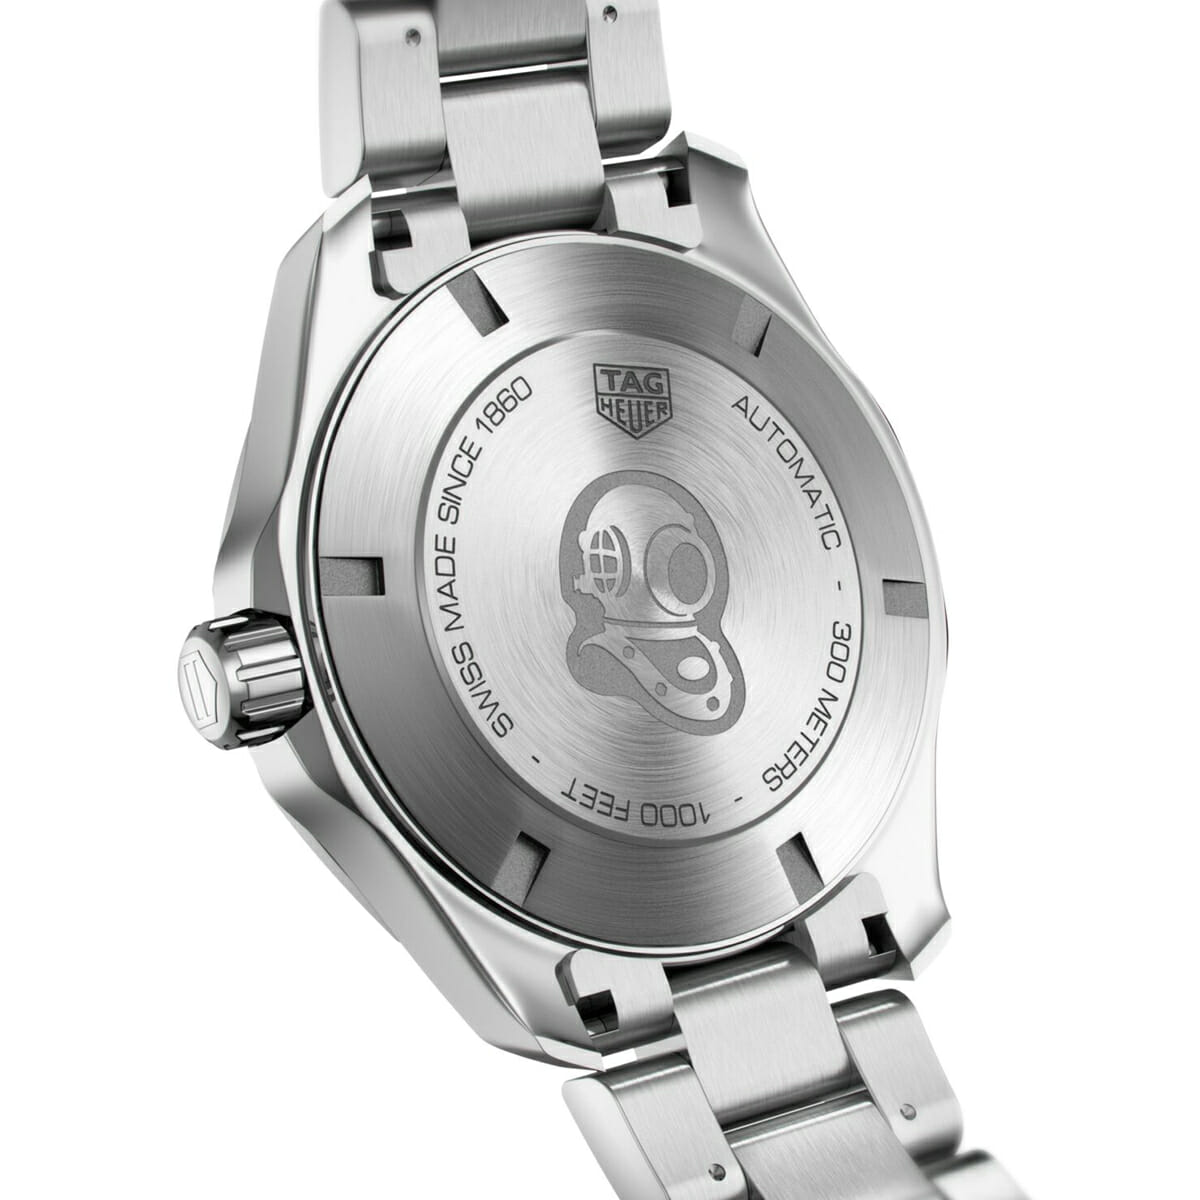 Aquaracer 43mm Steel Automatic Watch